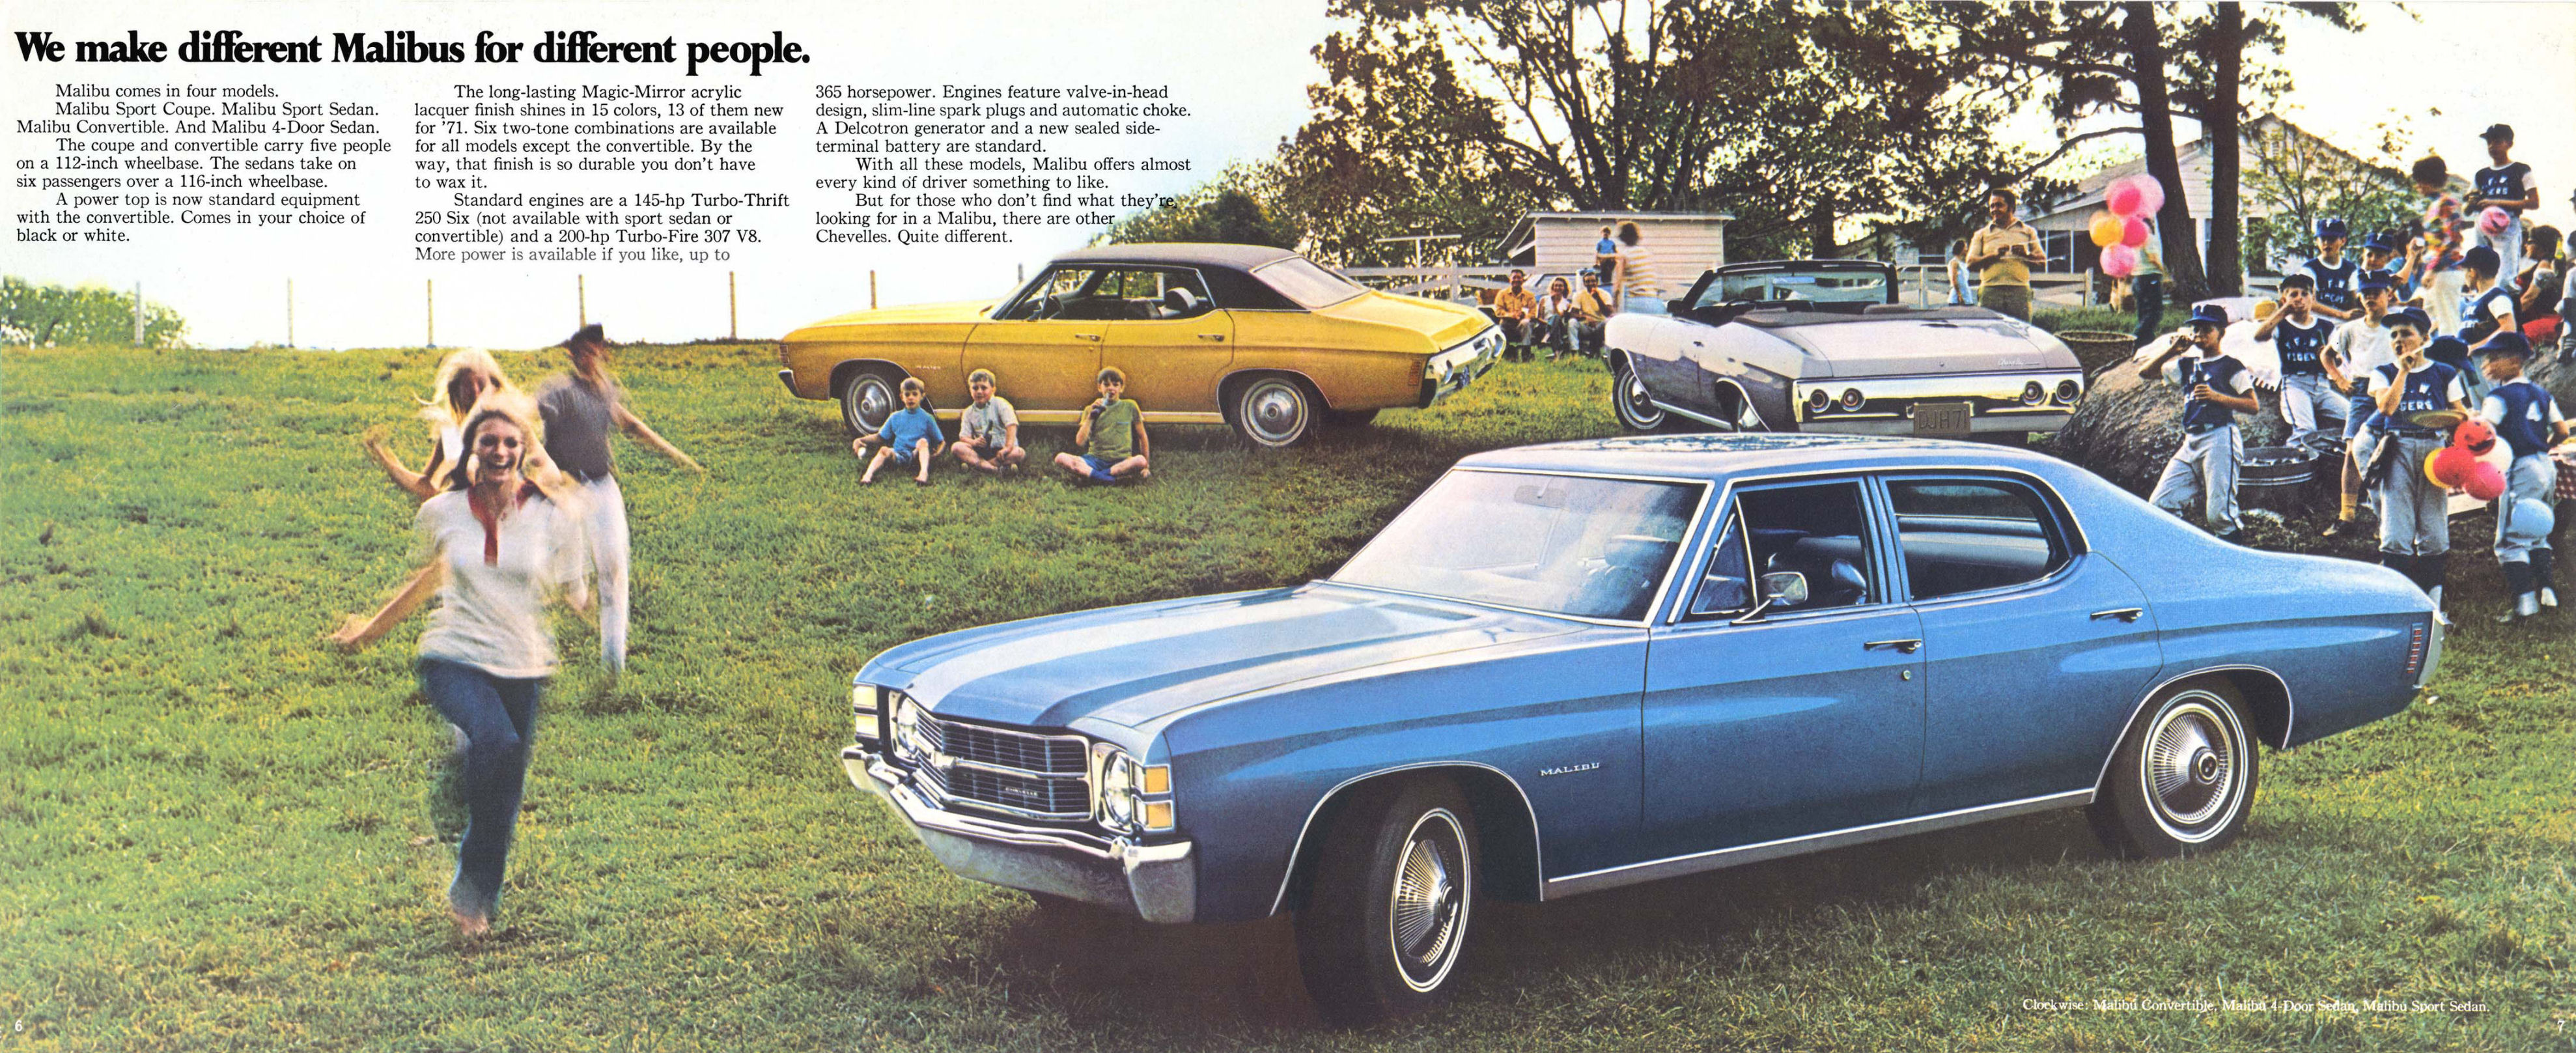 1971_Chevrolet_Chevelle-06-07